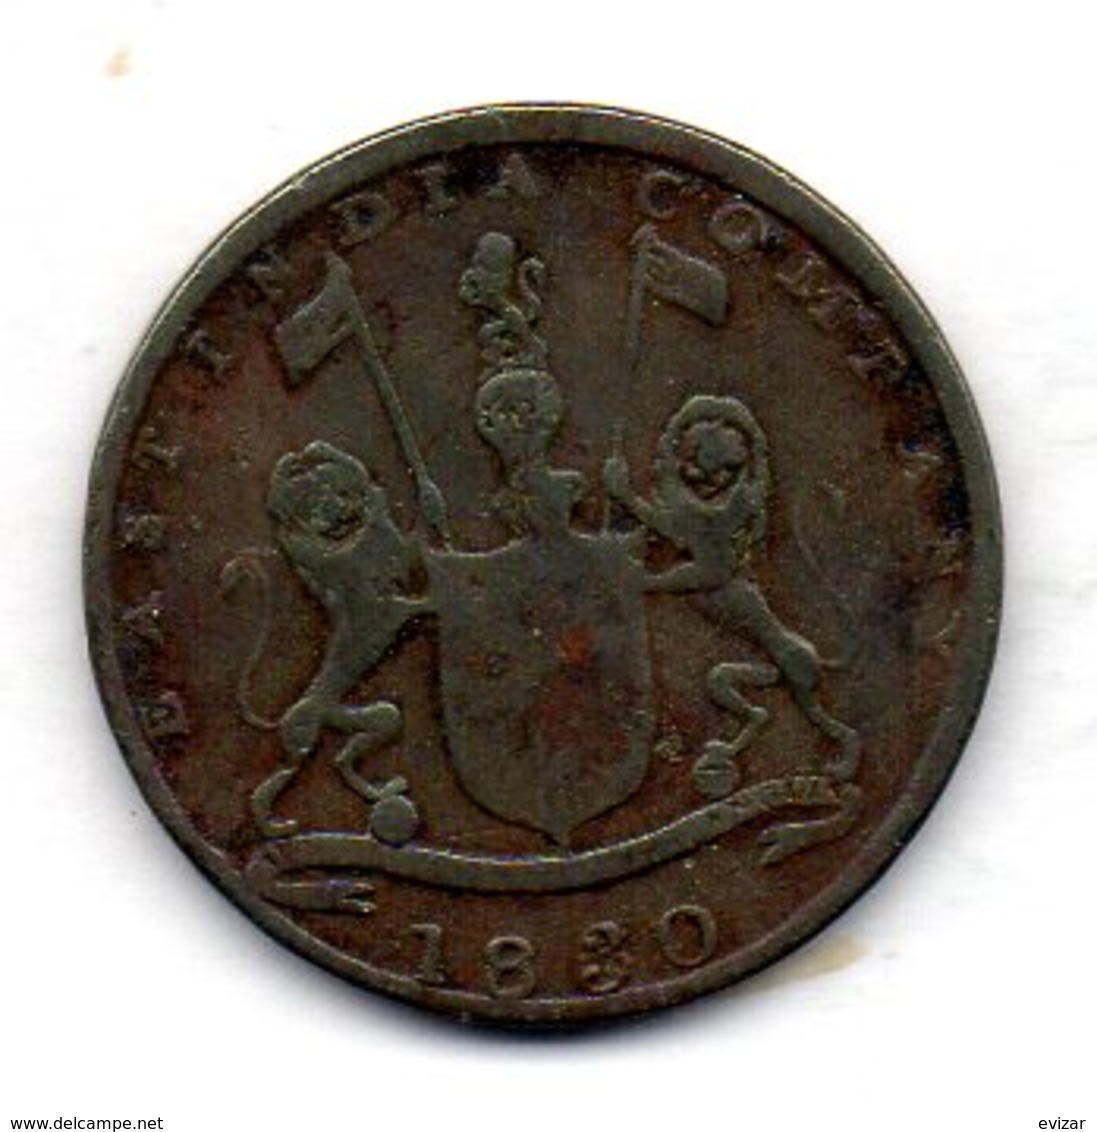 BRITISH INDIA - BOMBAY PRESIDENCY, 1/4 Anna, Copper, Year AH 1246 (1830), KM #231.1 - India